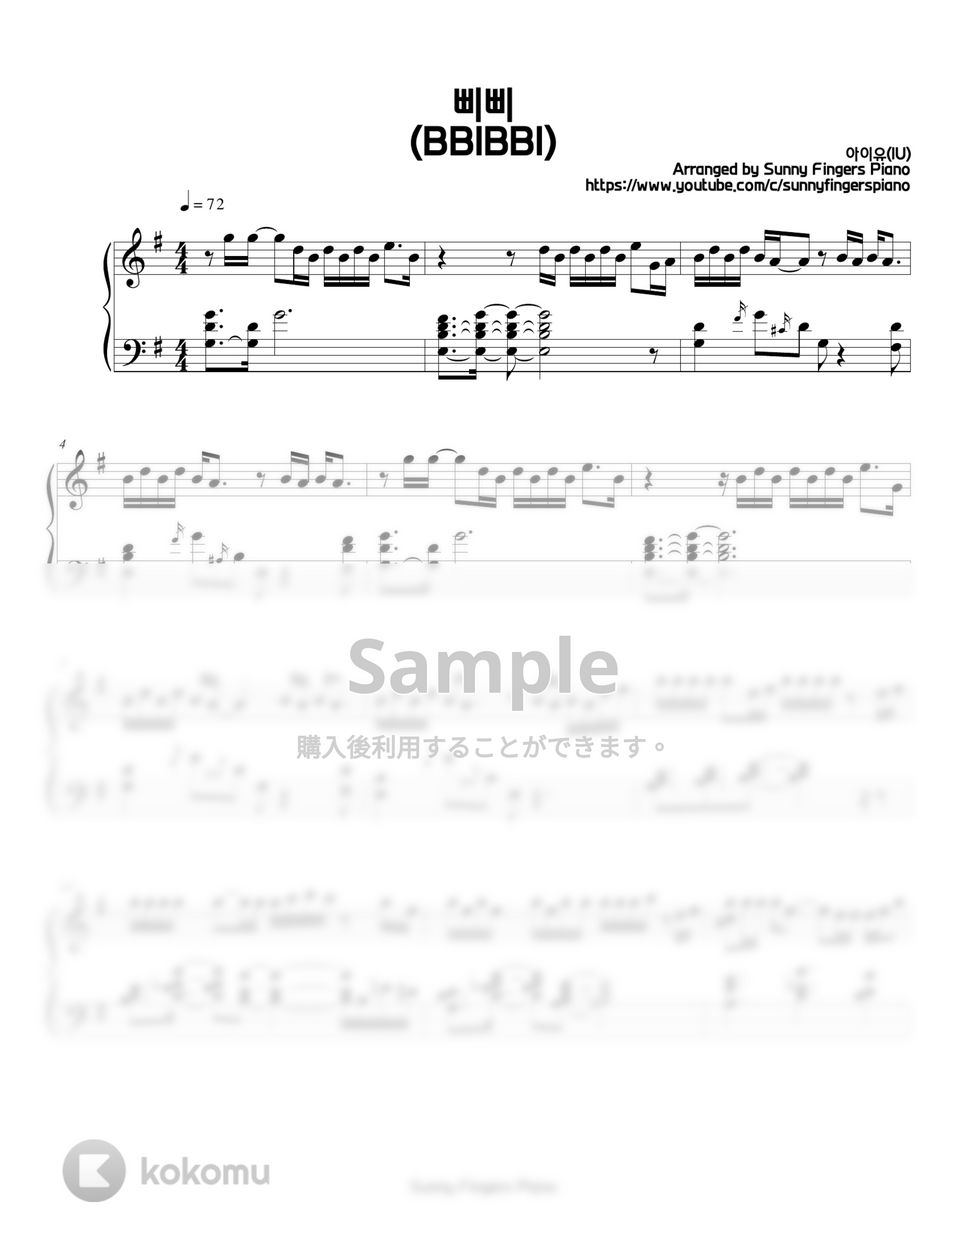 IU - BBIBBI (삐삐) by Sunny Fingers Piano